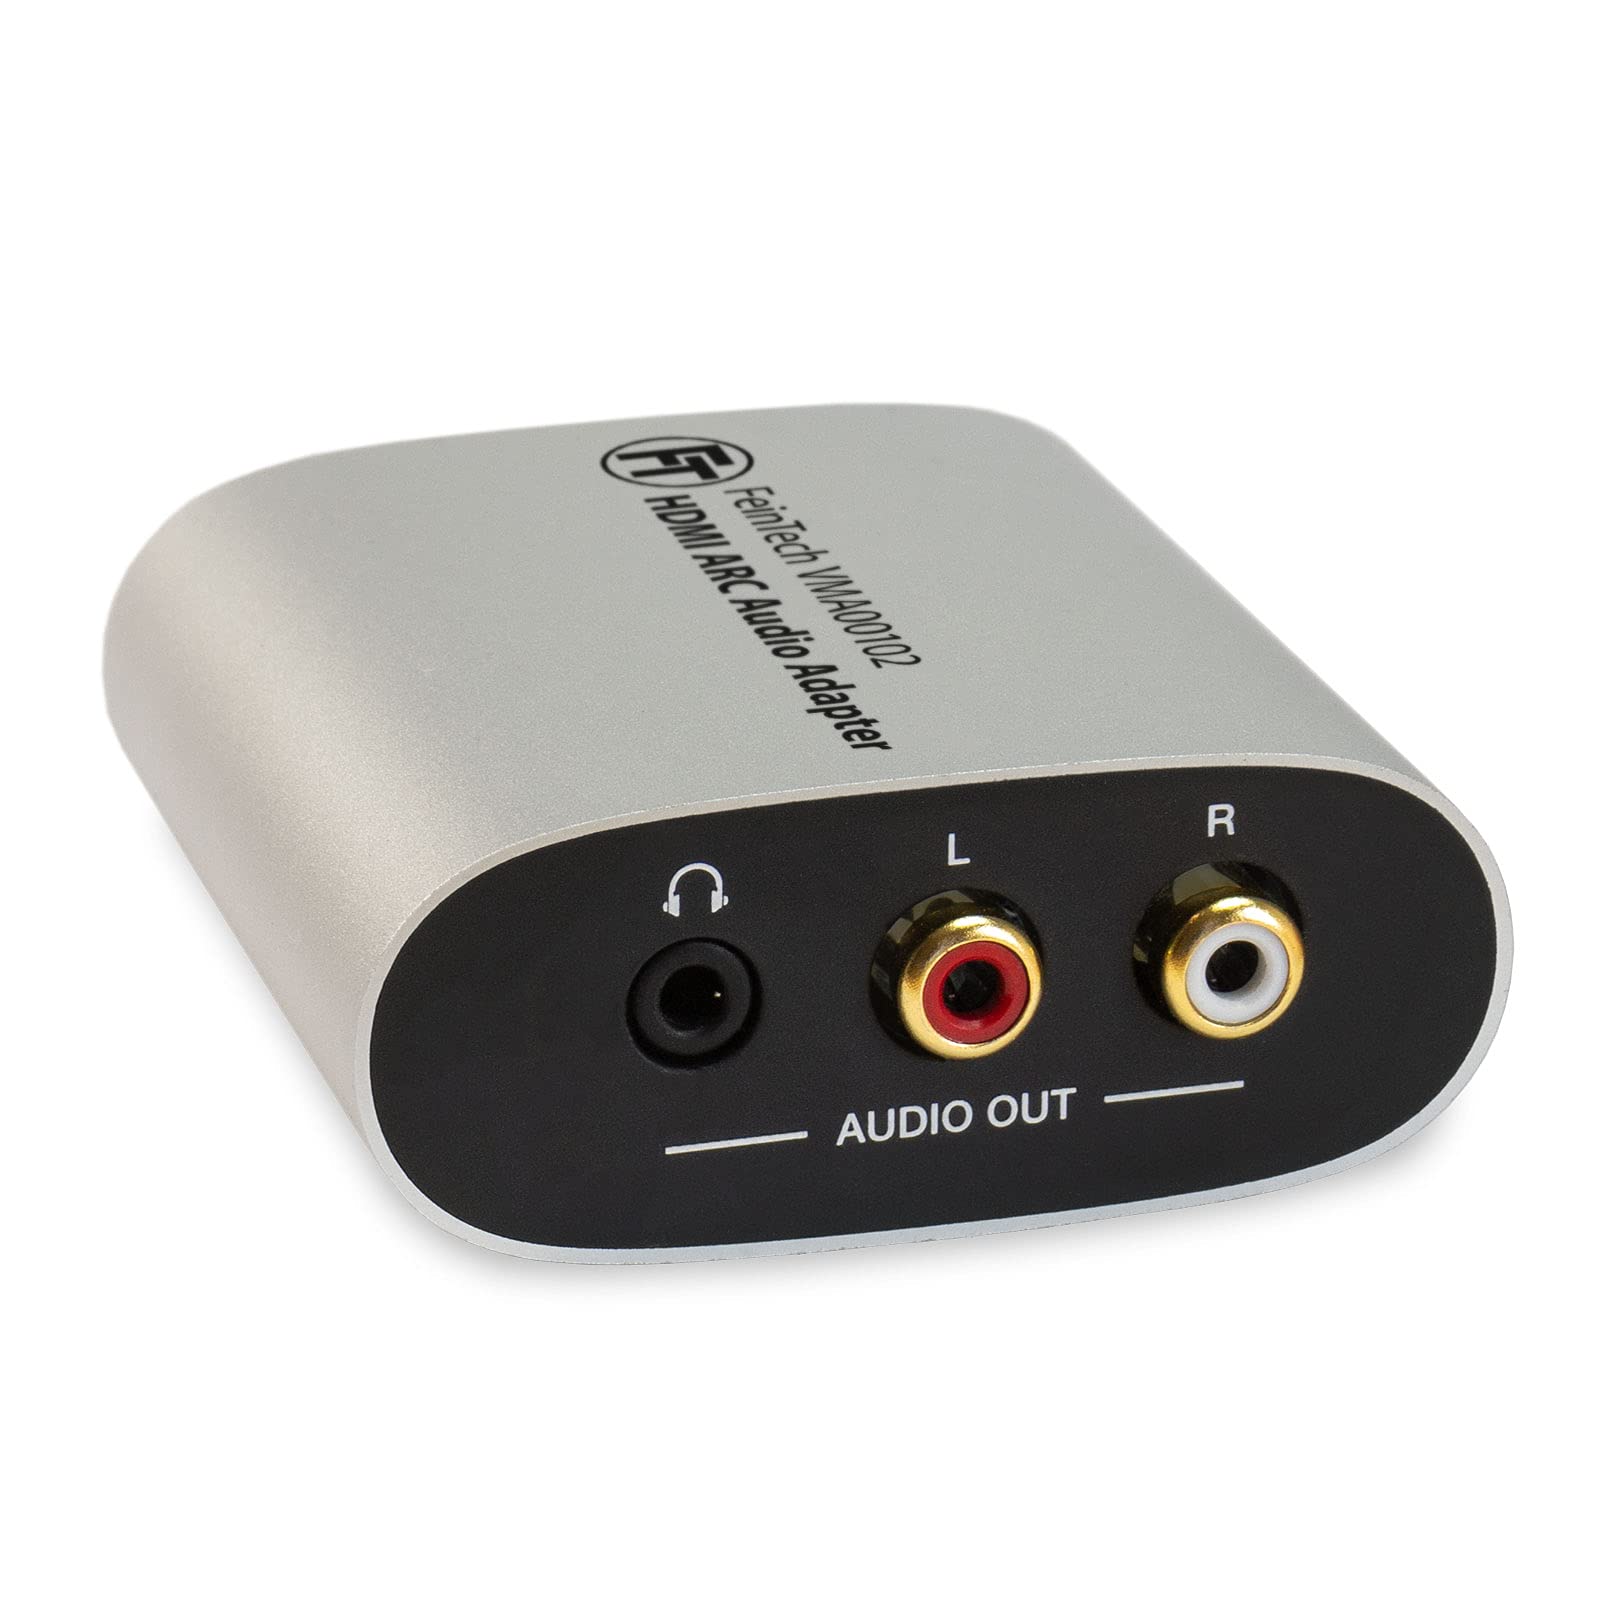 FeinTech VMA00102 HDMI-eARC Audio TV Adapter für Kopfhörer Stereo-Anlage mit Lautstärke-Steuerung